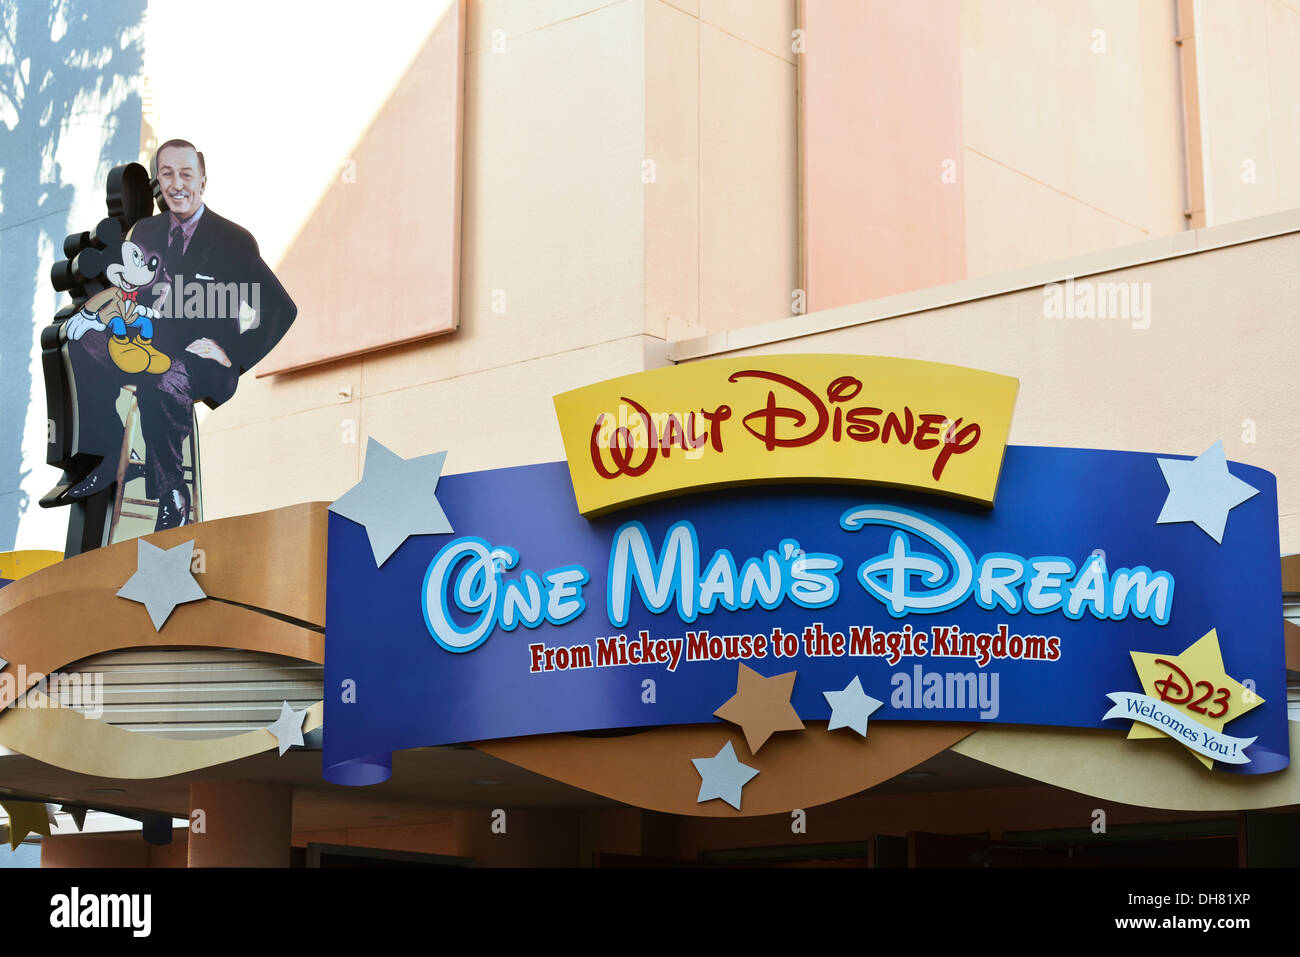 Walt Disney One Man's Dream sign, Hollywood Studios, Disney World Resort, Orlando Florida Stock Photo